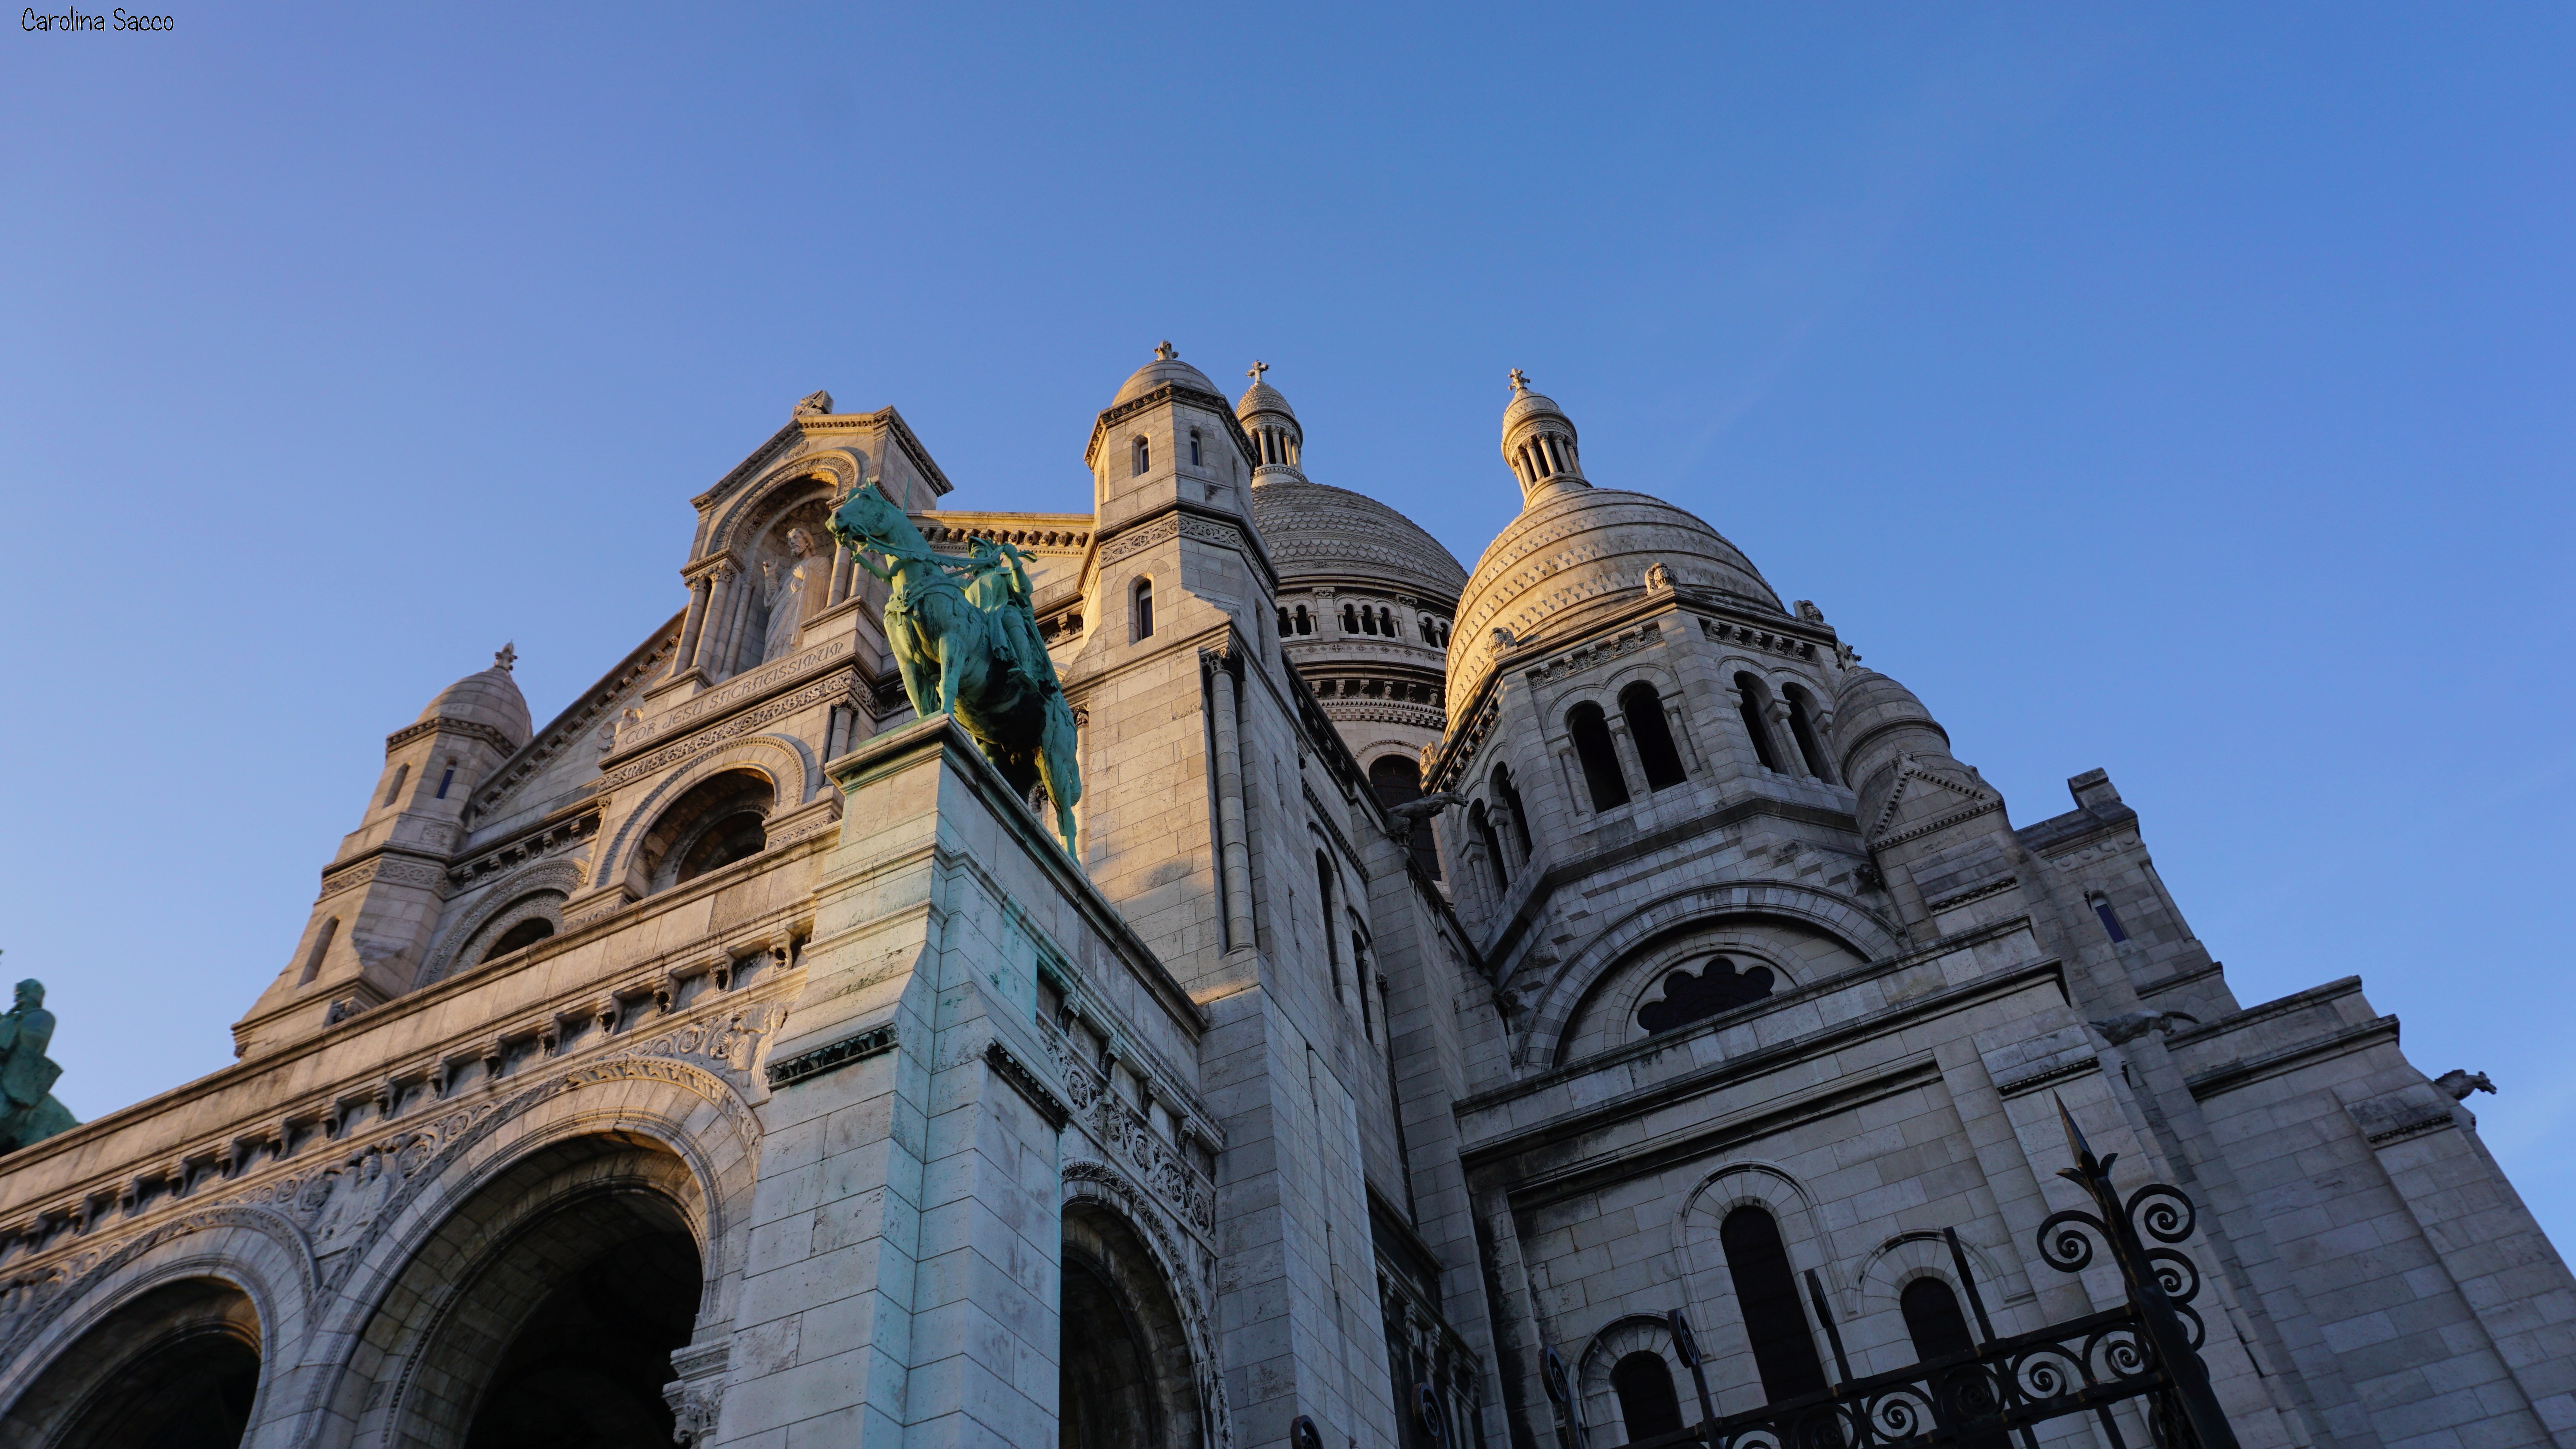 Montmartre - Sacro Cuore